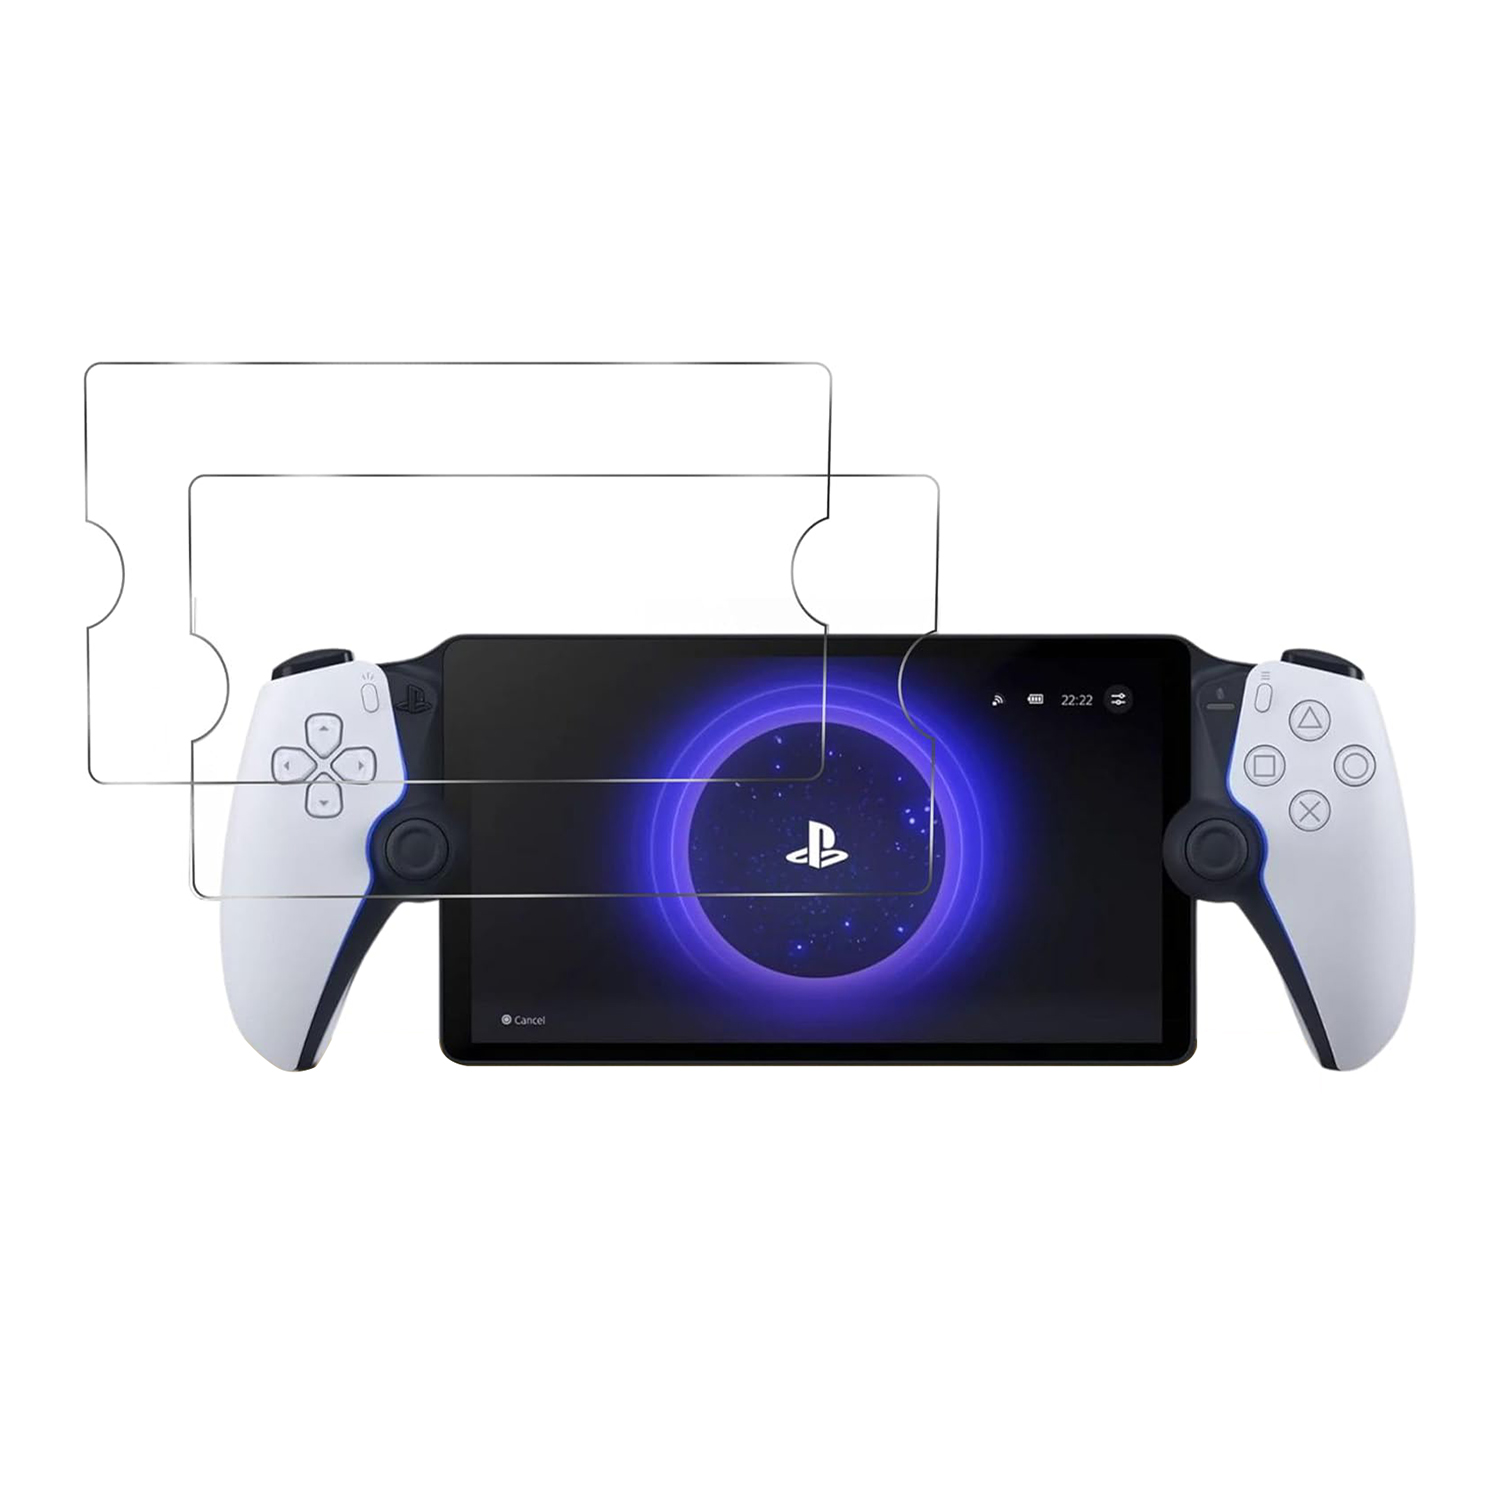 Sony Playstation Portal screen protector